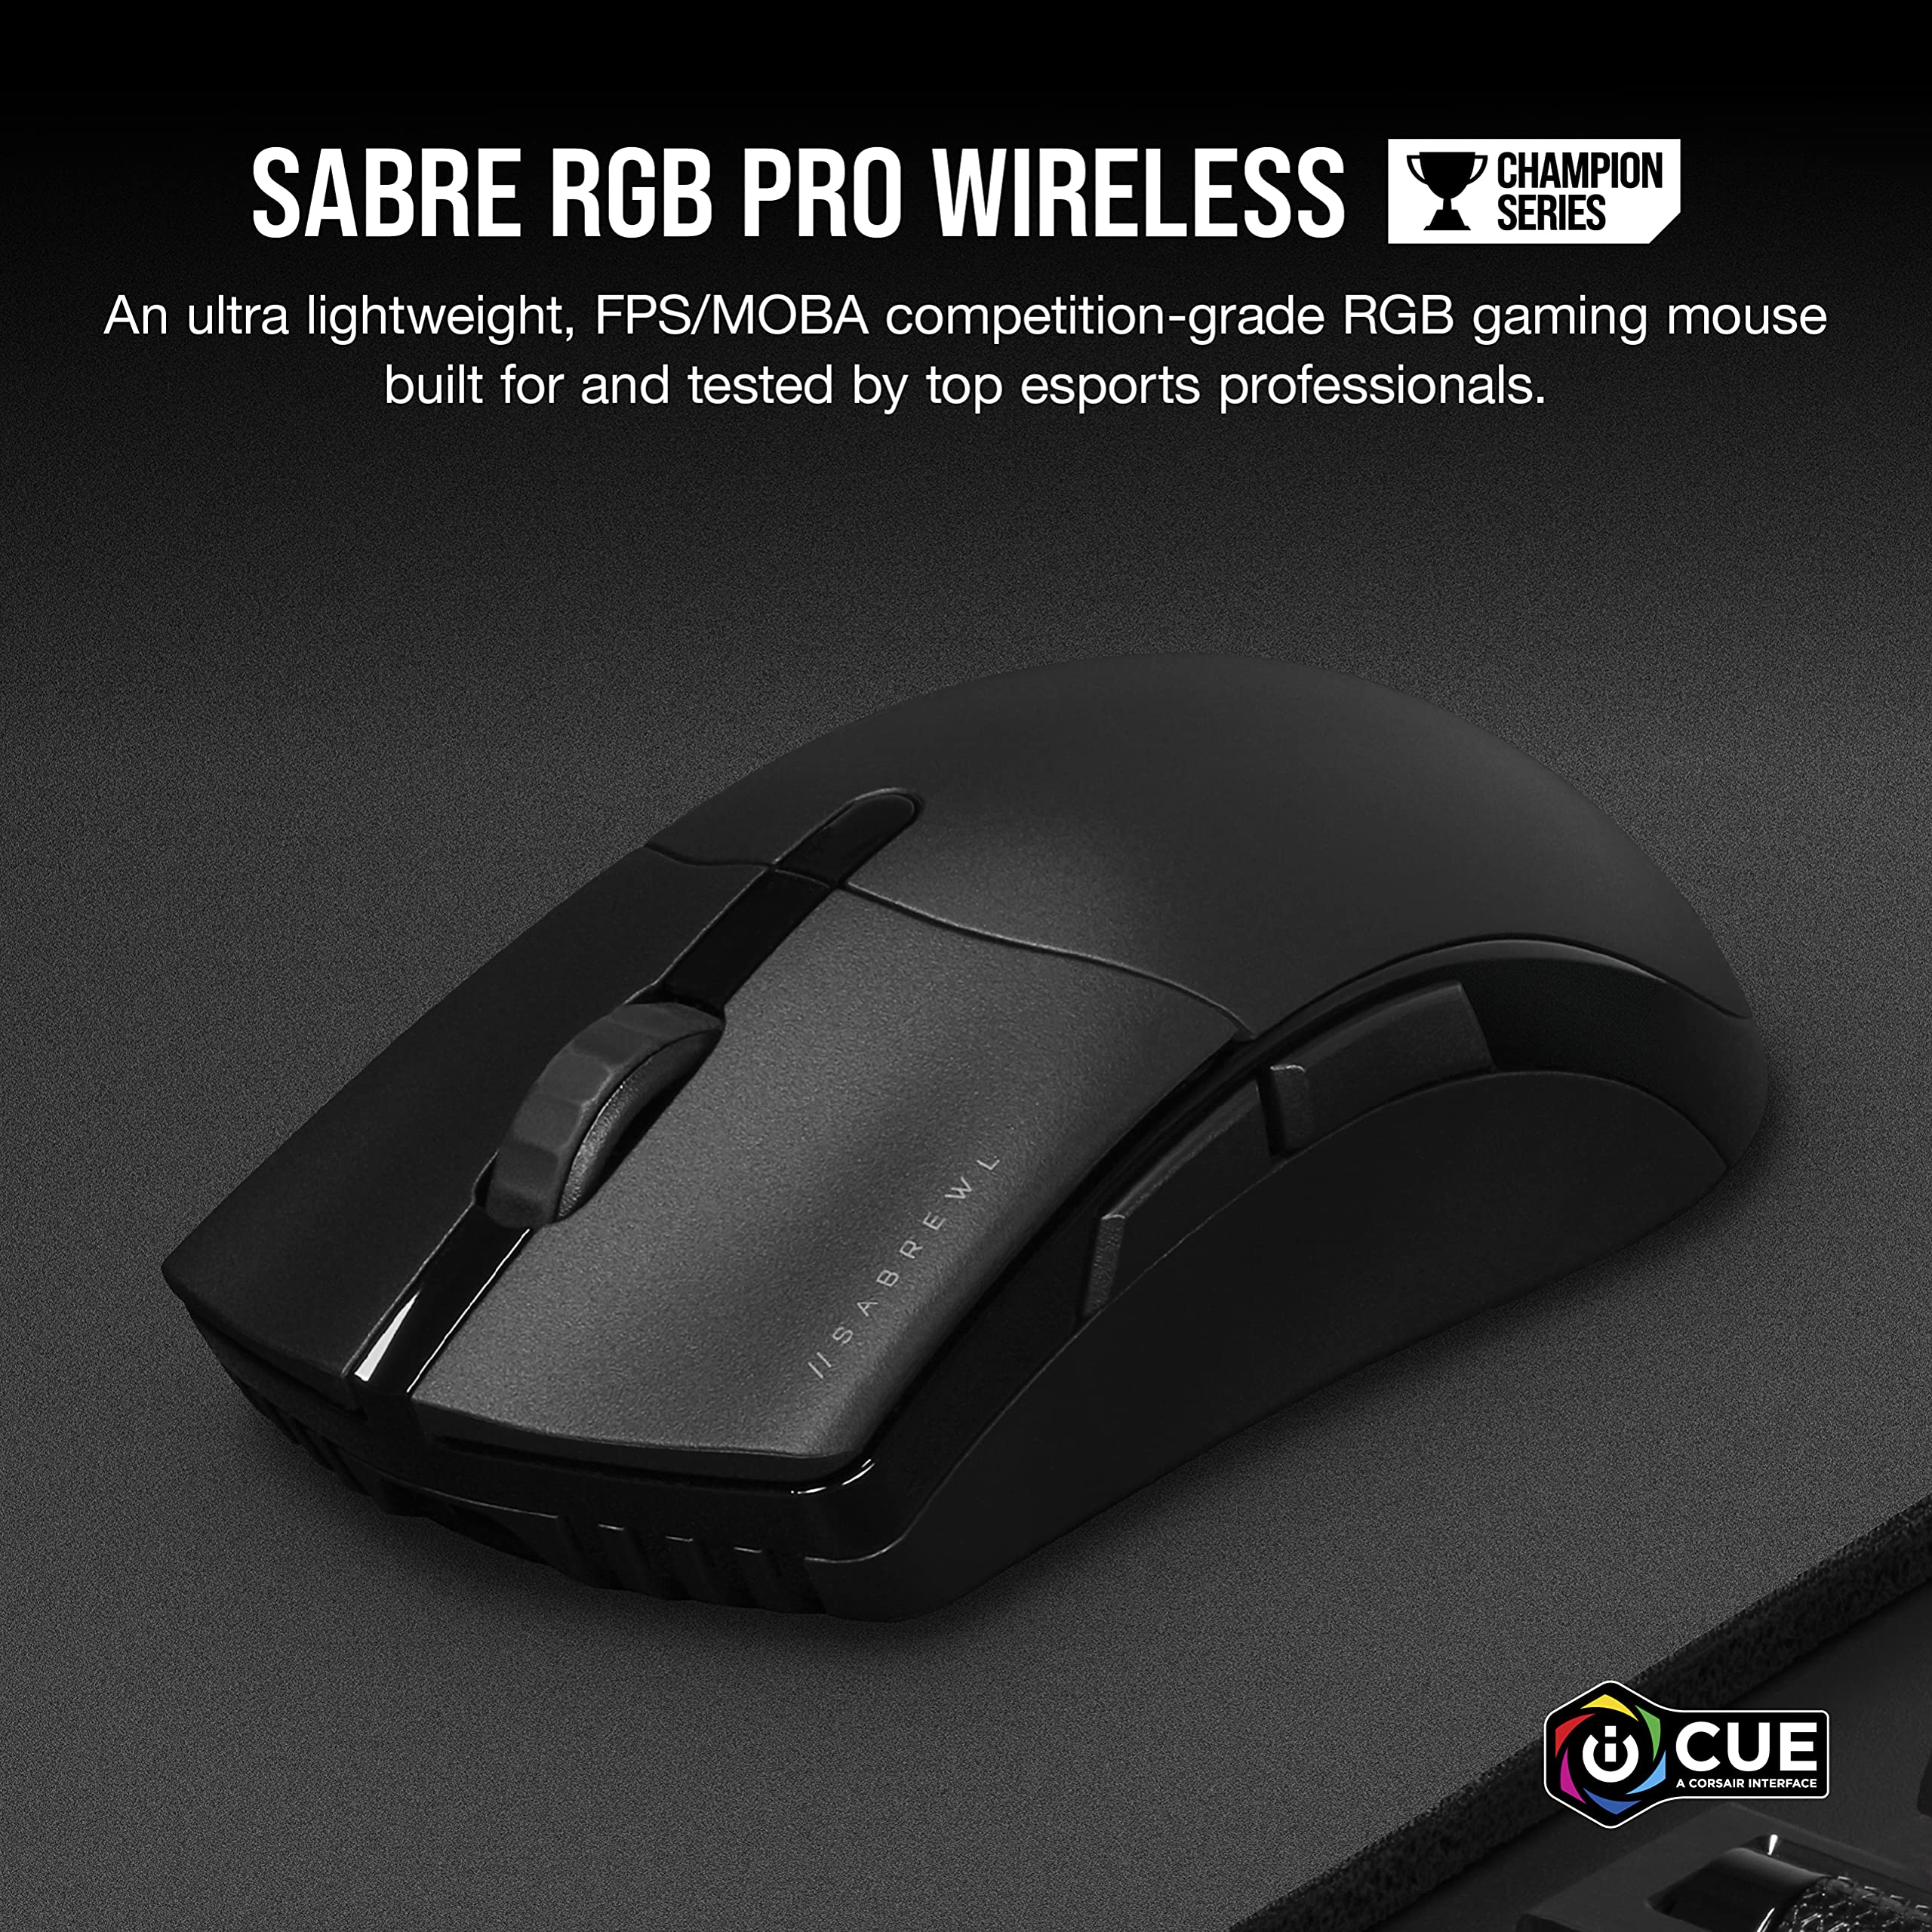 Corsair SABRE RGB PRO WIRELESS CHAMPION SERIES, Ultra-lightweight FPS/MOBA Wireless Gaming Mouse, Black (Renewed)